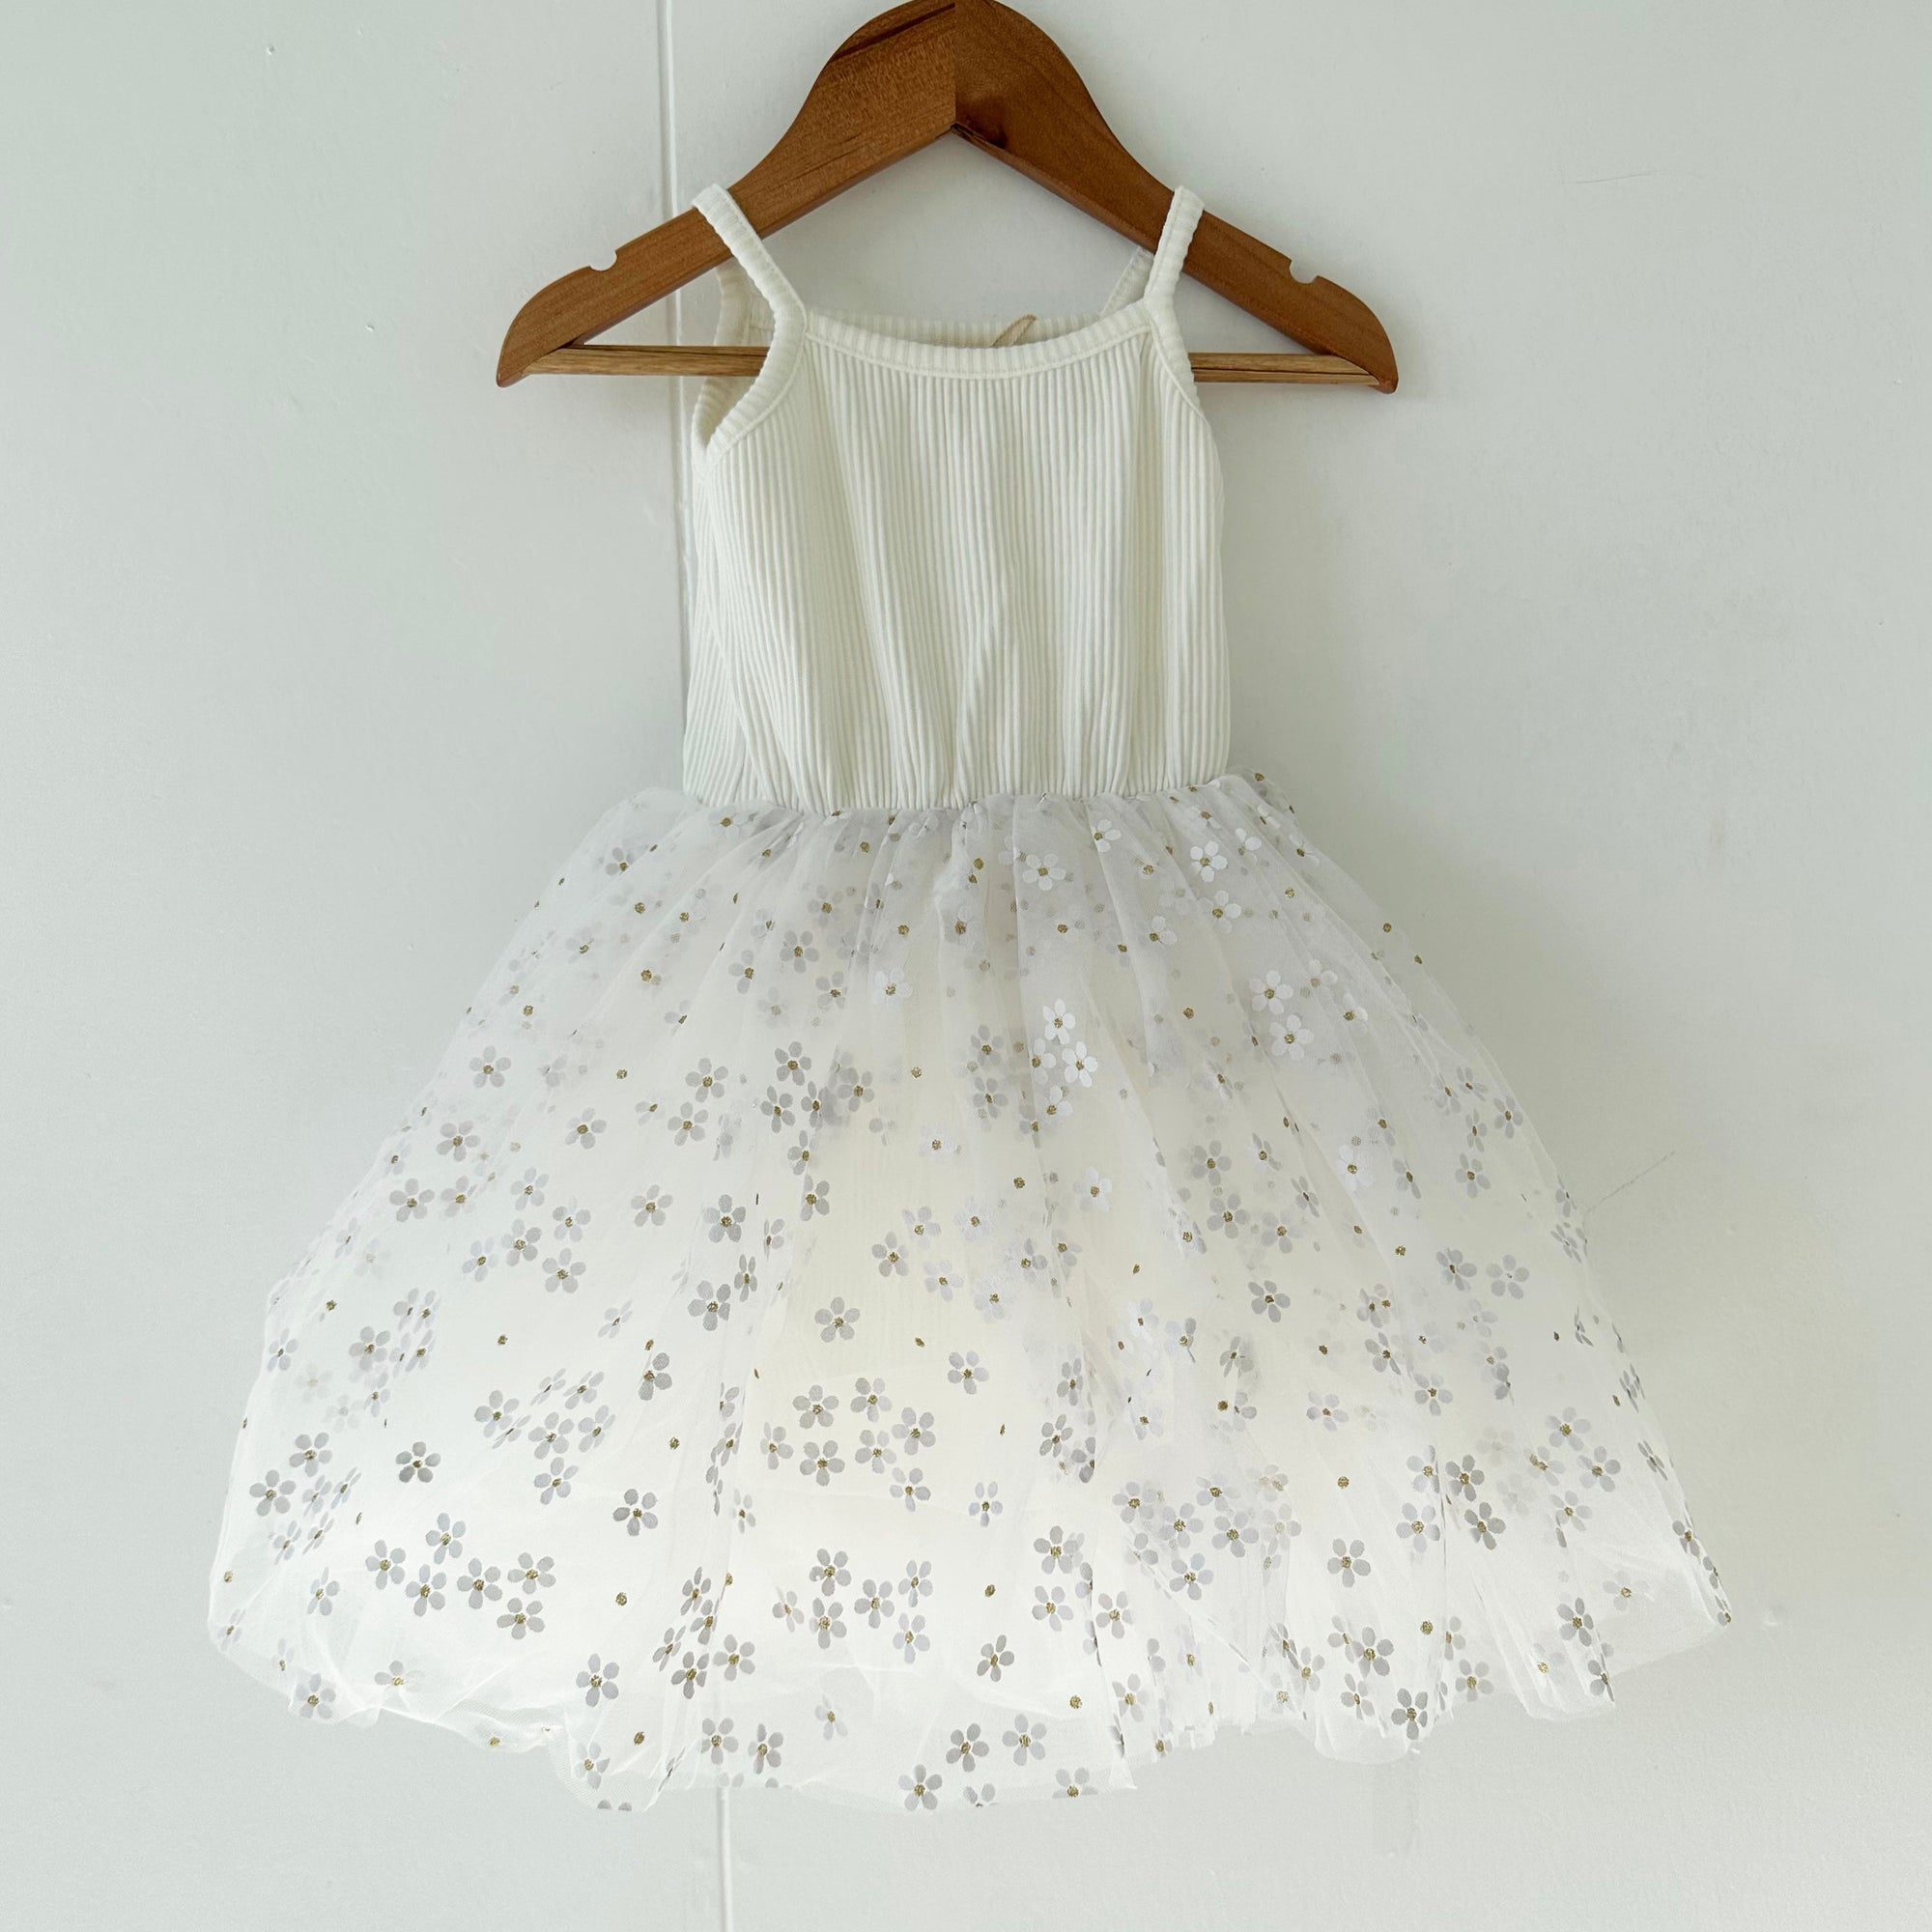 MA MER VALENTINA TUTU DRESS: WHITE FLOWERS